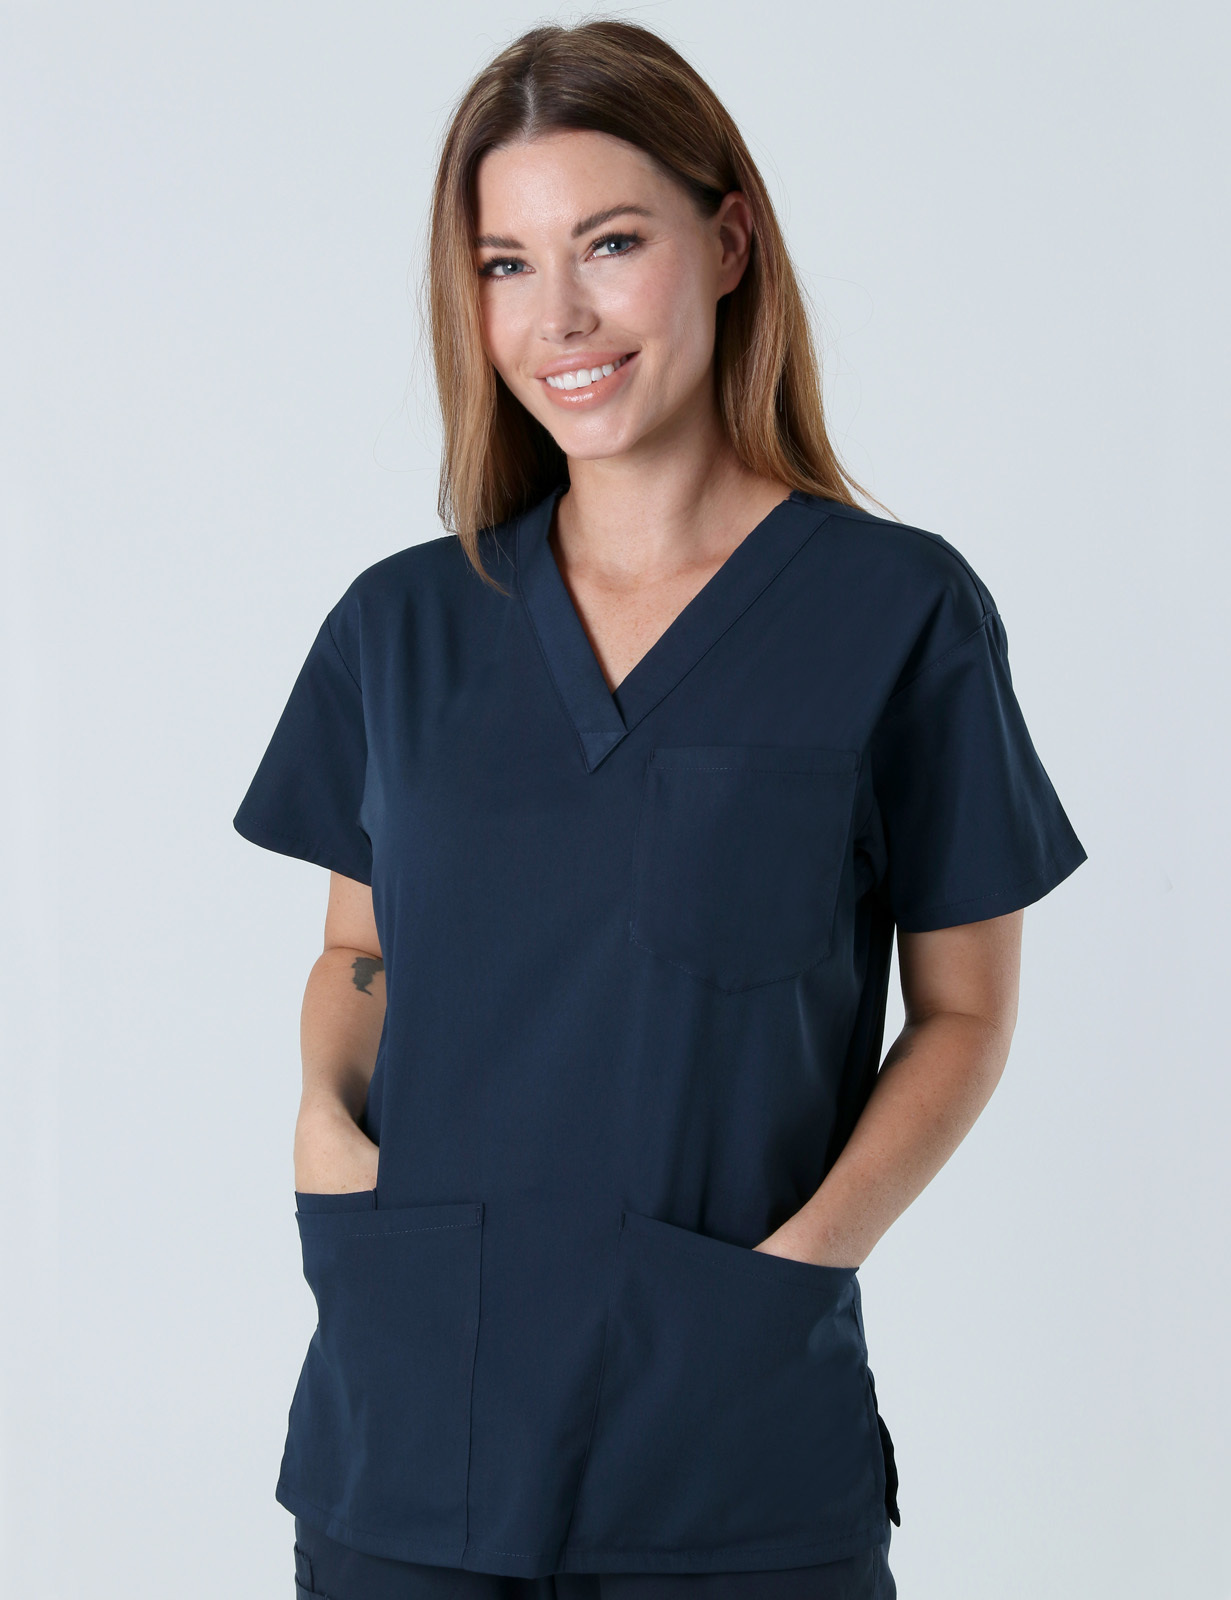 Peninsula Health - AAAU Nurse (4 Pocket Scrub Top in Navy incl Logos)